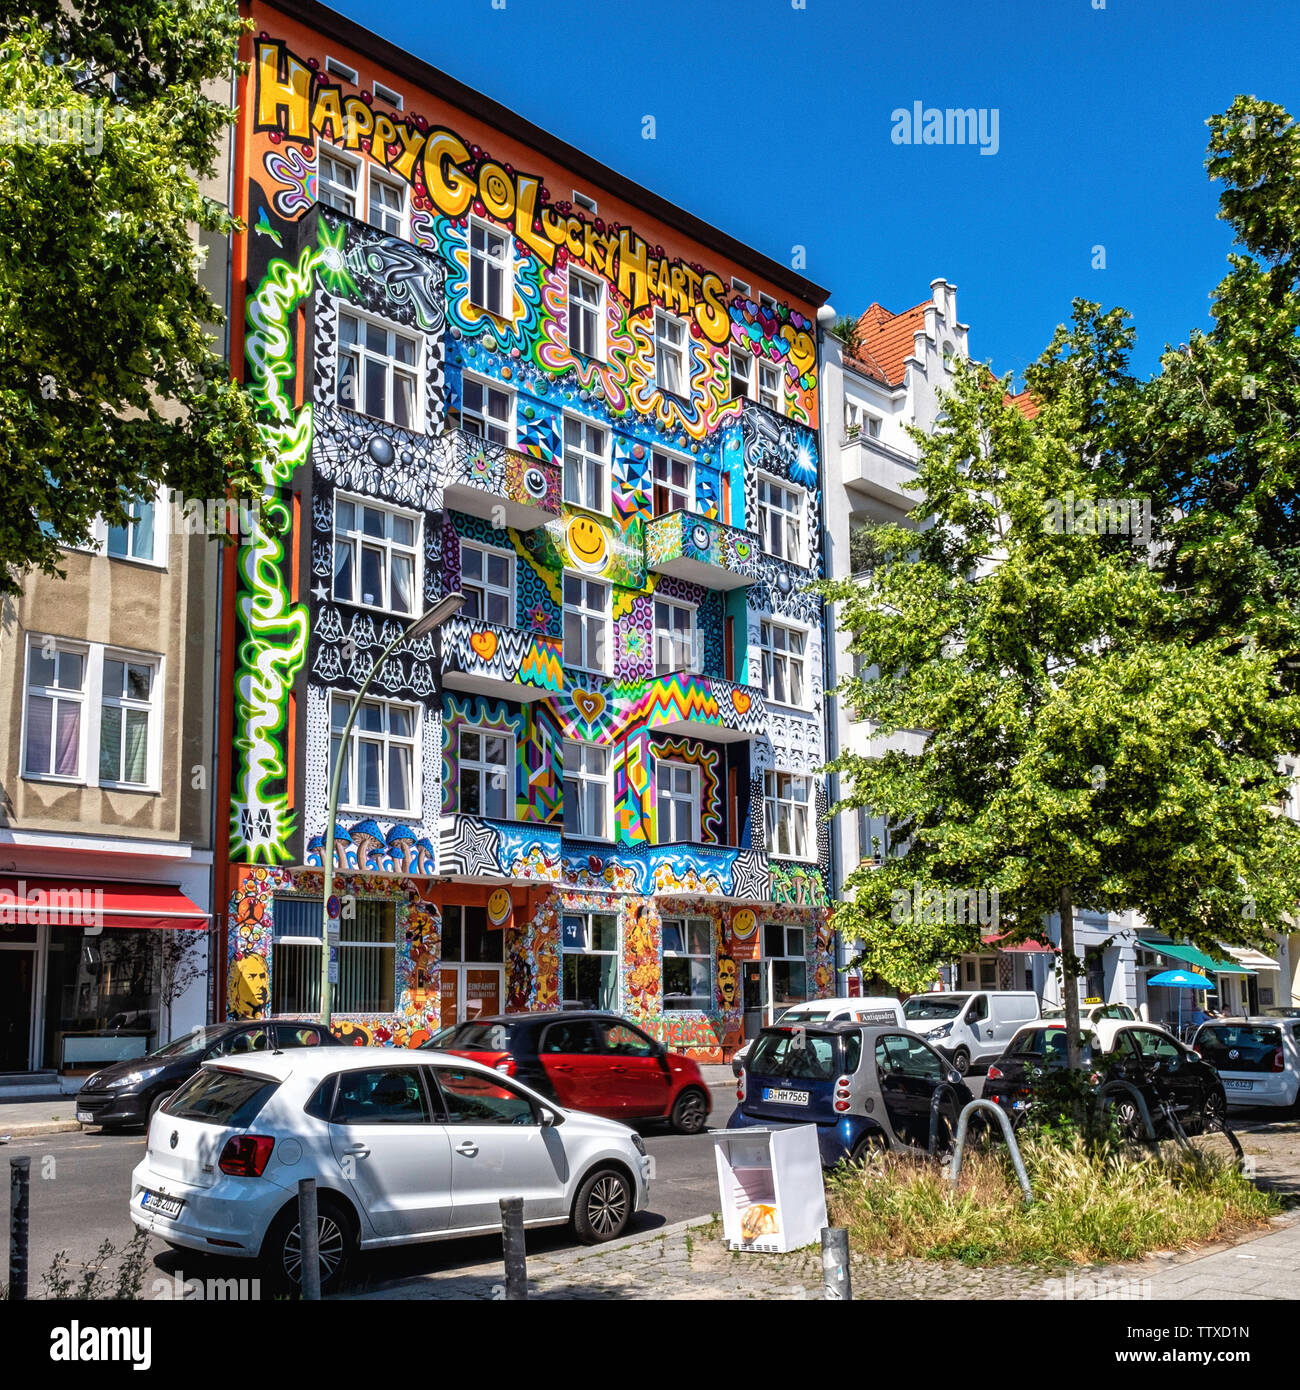 Happygolucky Hotel & Hostel. Colourful exterior  facade of Tourist accommodation on Stuttgarter Platz, Charlottenburg-Berlin Stock Photo